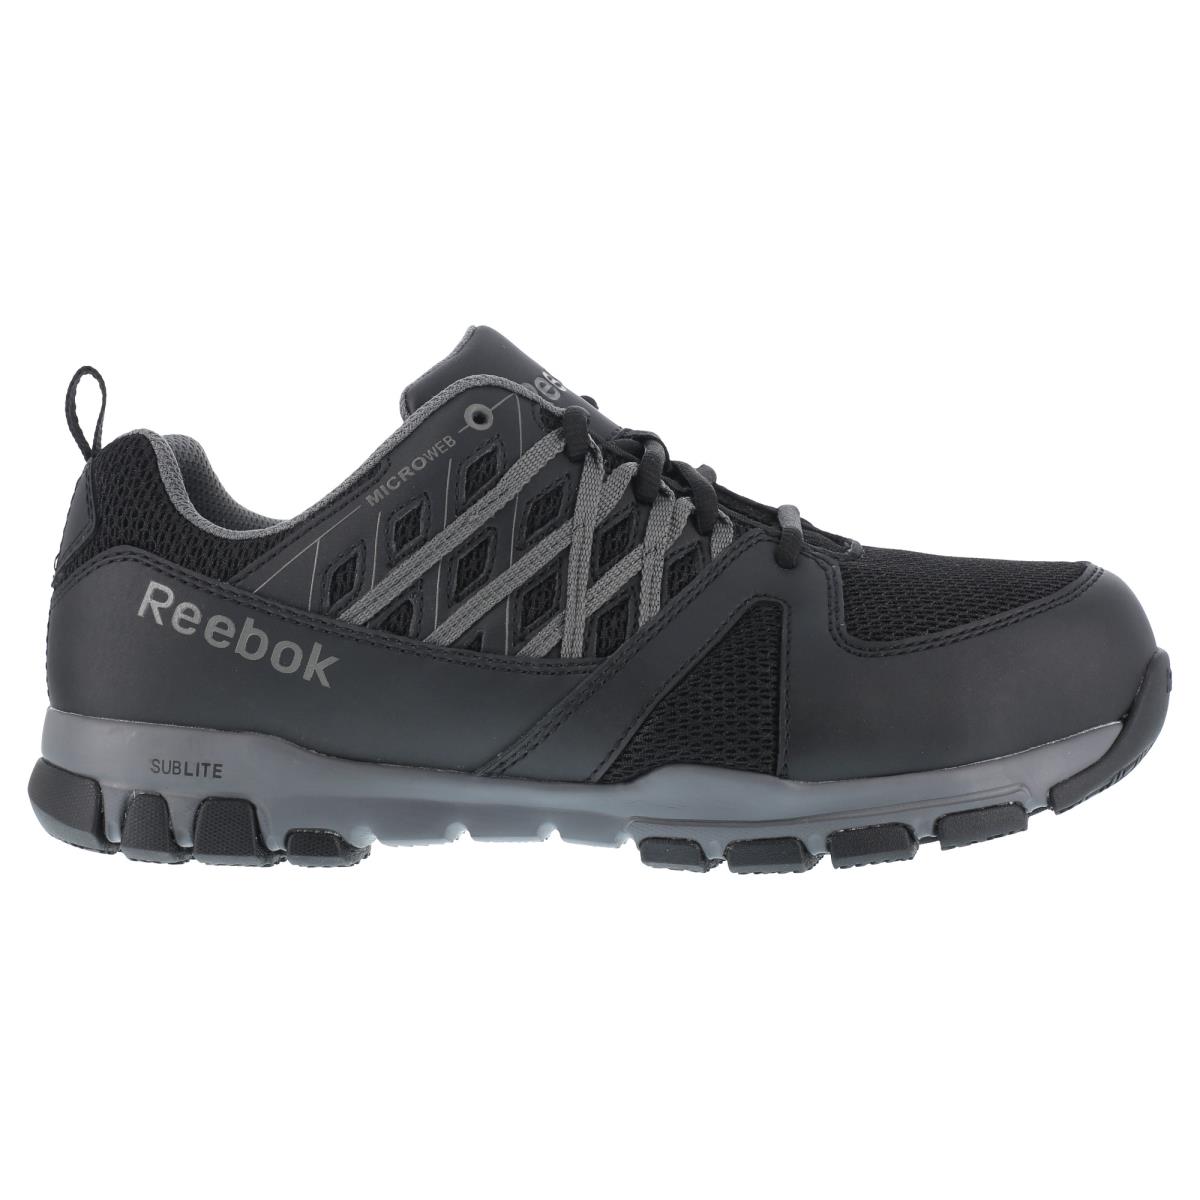 Reebok Mens Black Leather Work Shoes Athletic Oxford Sublite Soft Toe M